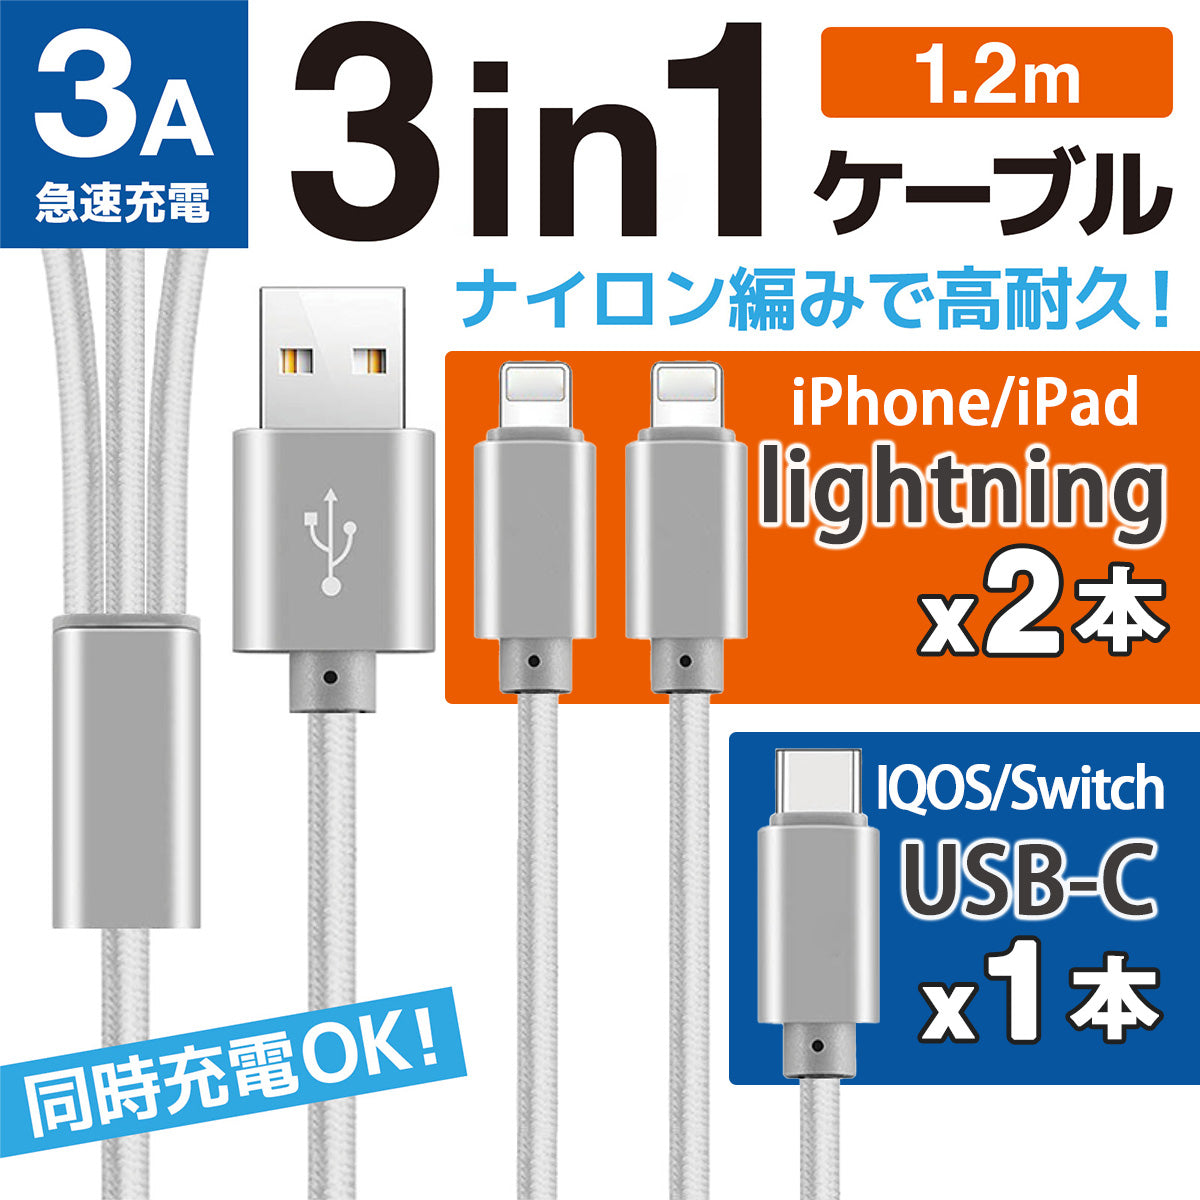 iPhone15ケーブル USB Type-C USB充電ケーブル アイフォン15 充電ケーブル 4in1 高速データ通信 データ伝送 高耐久ナイロン編み iOS Android 多機種対応 高耐久